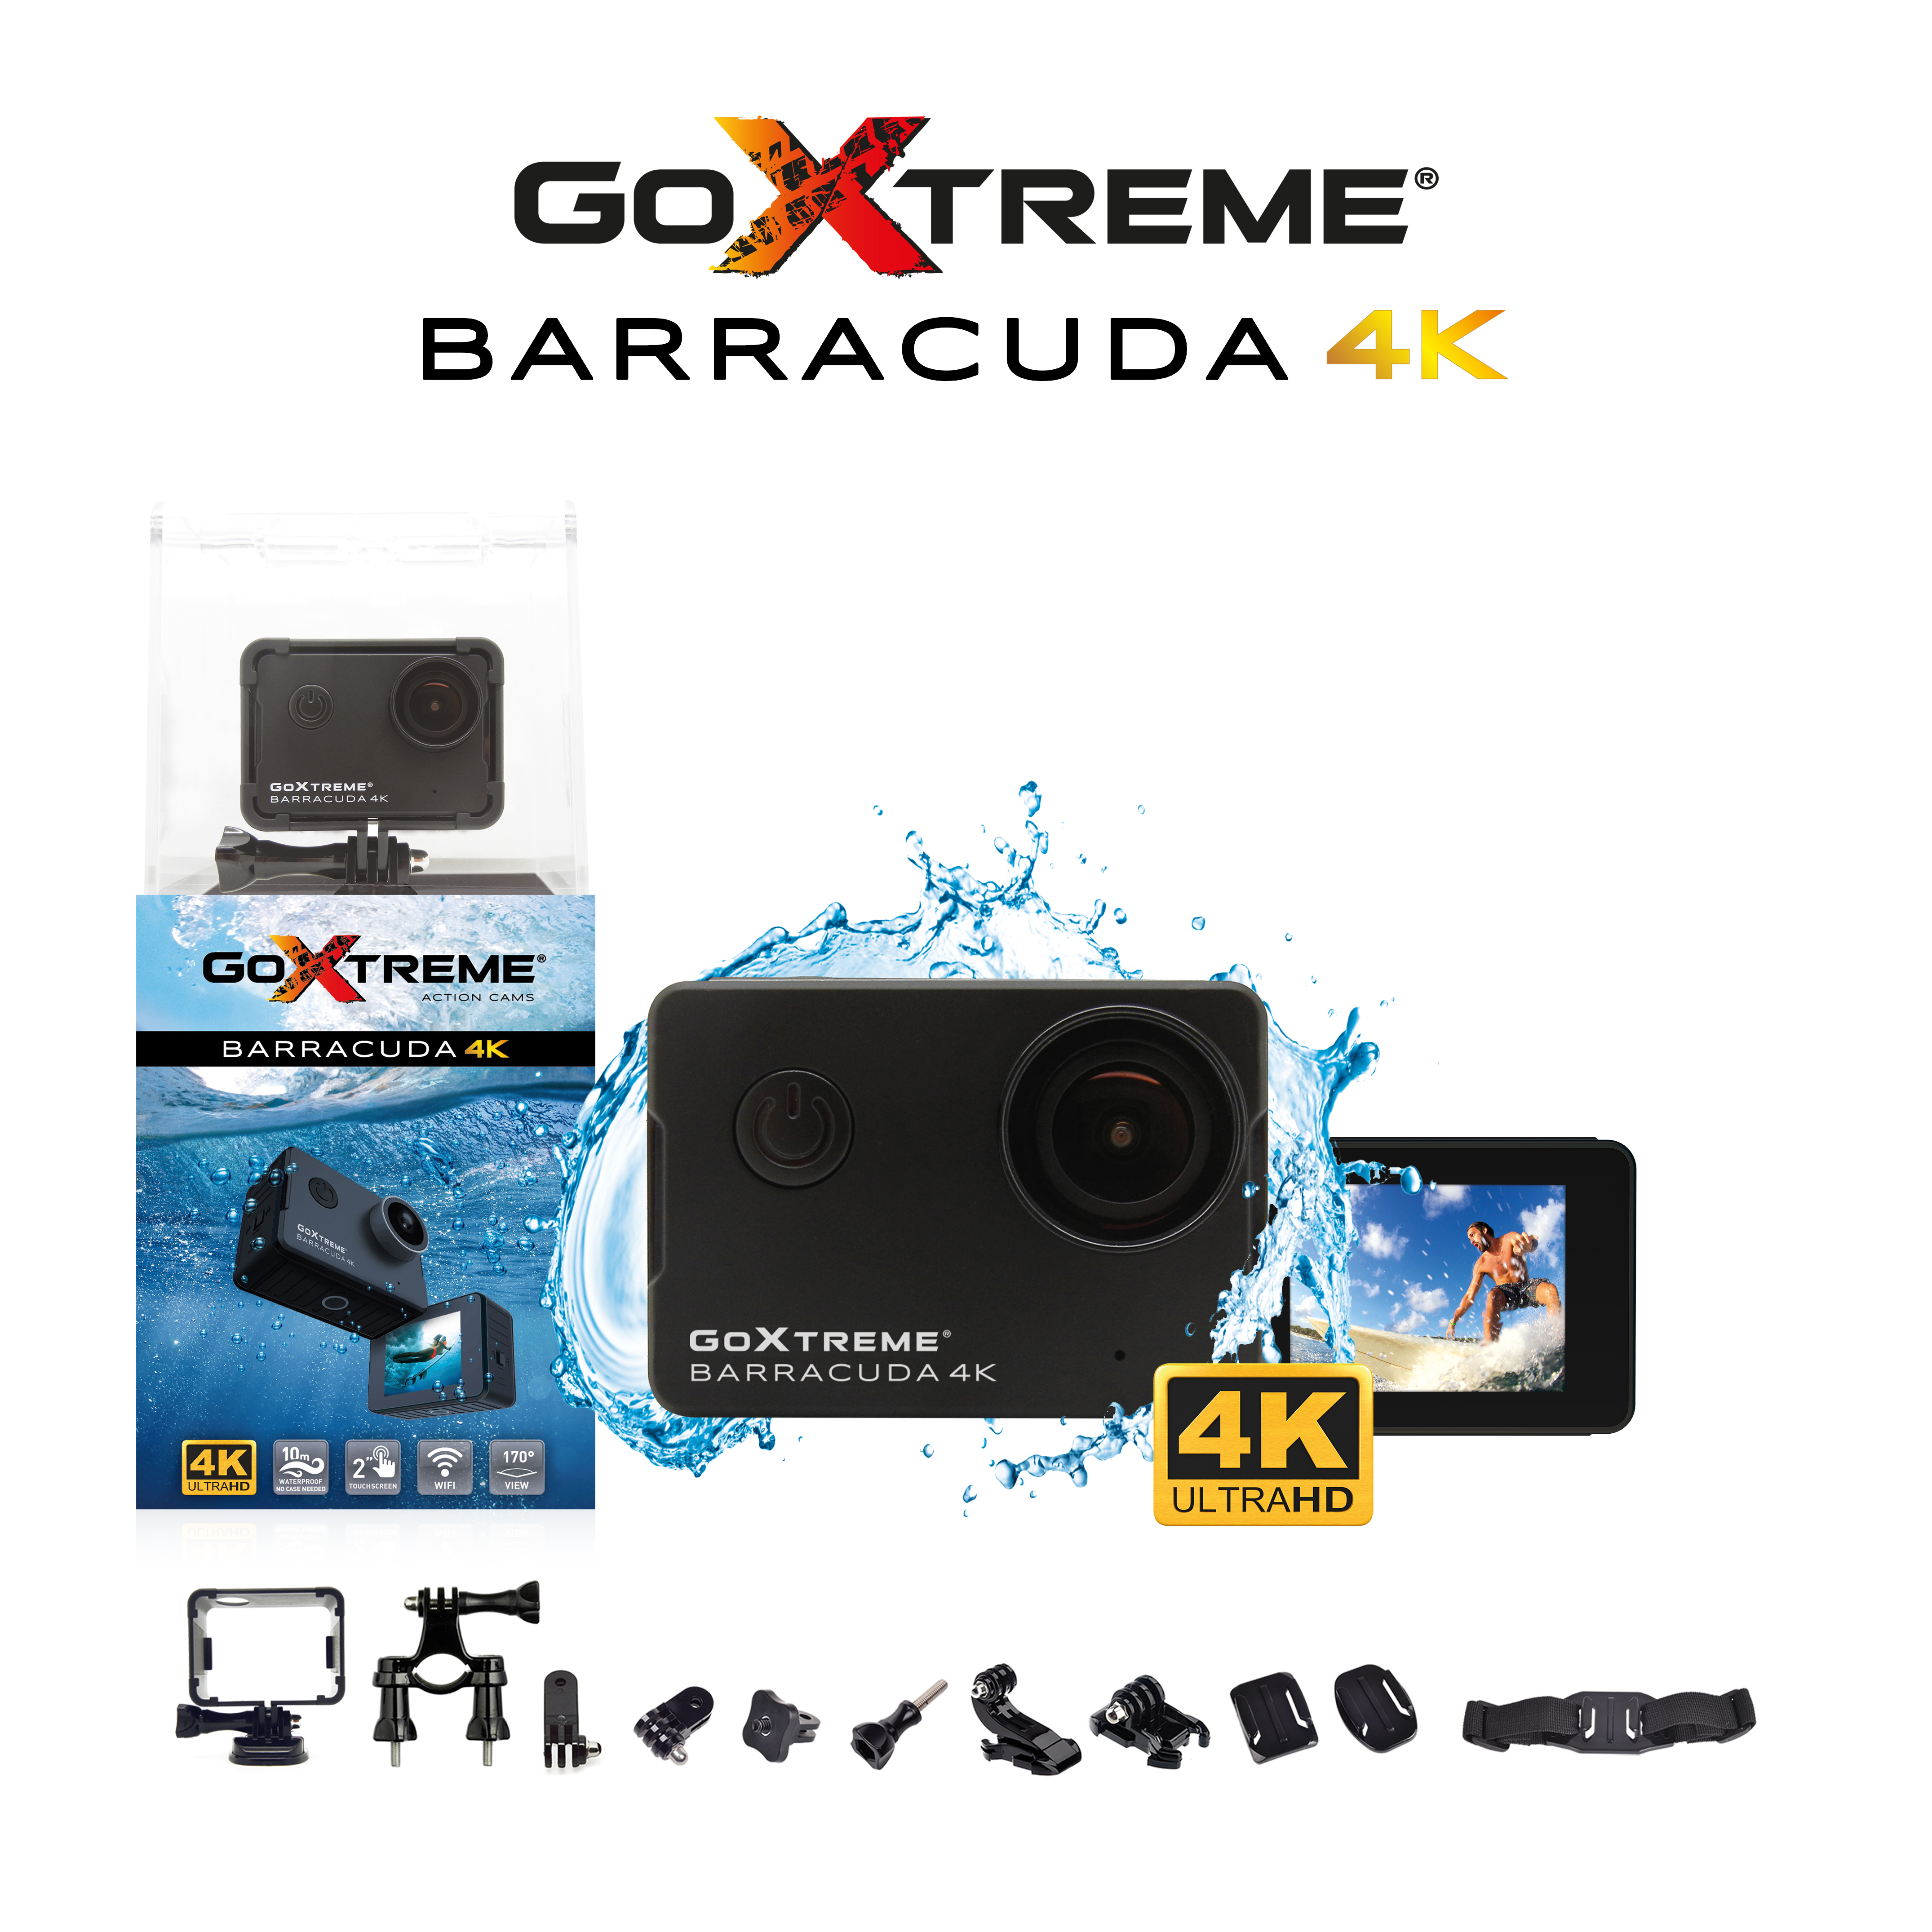 GoXtreme Barracuda 4K – Ultimative Performance unter Wasser